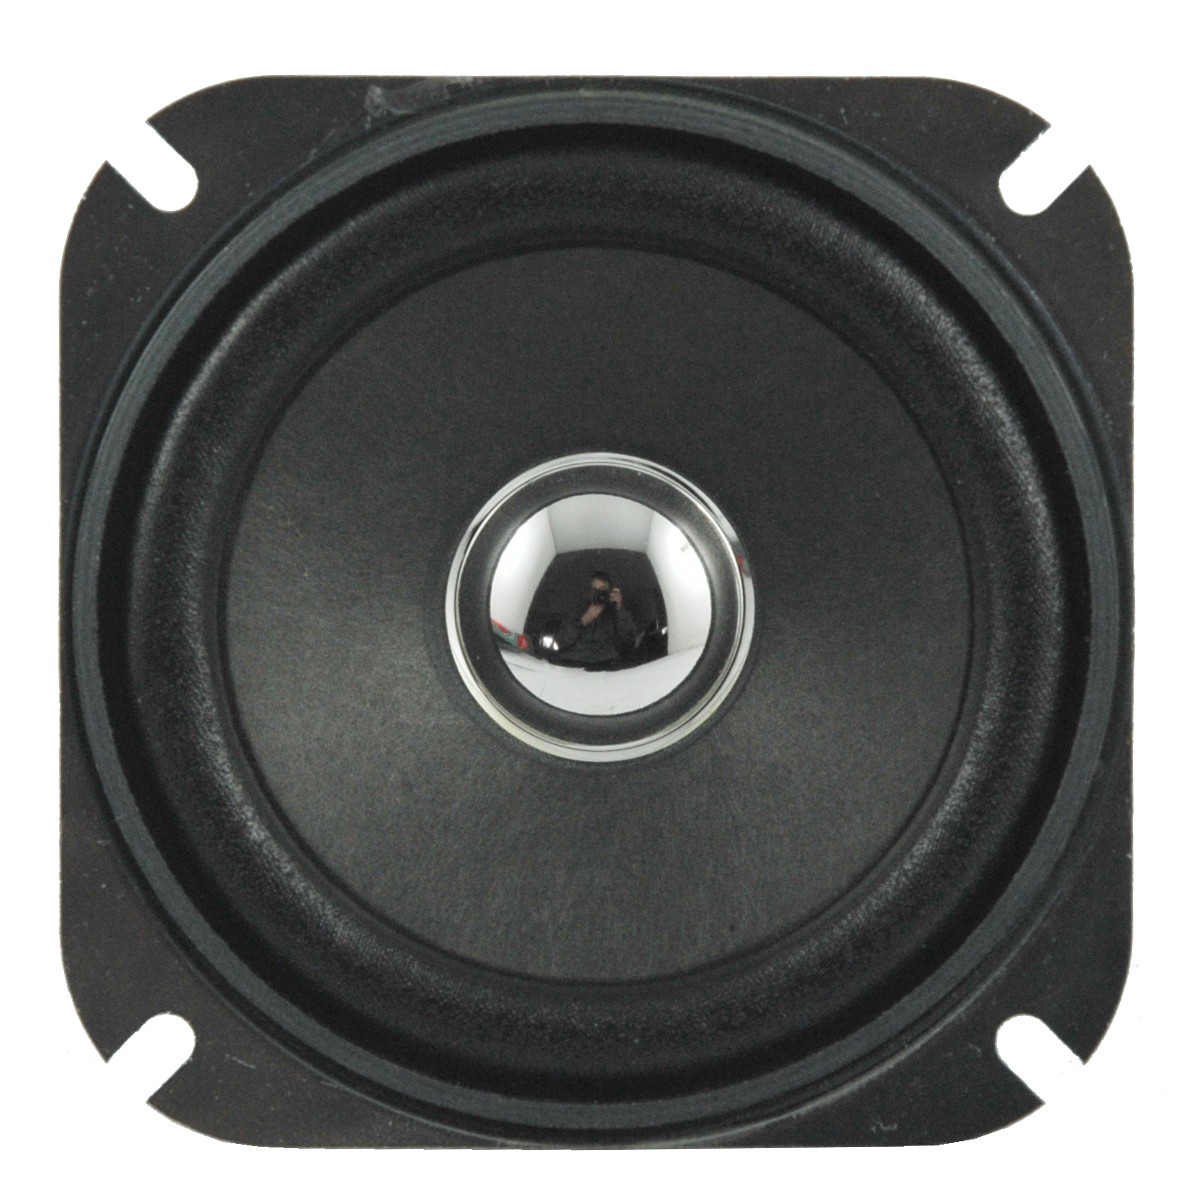 Audio Speaker / LS MT3.35 / LS MT3.40 / LS MT3.50 / LS PLUS 70 / LS PLUS 80 / LS PLUS 90 / LS U43 / TRG750 / A1866043 / 40007198